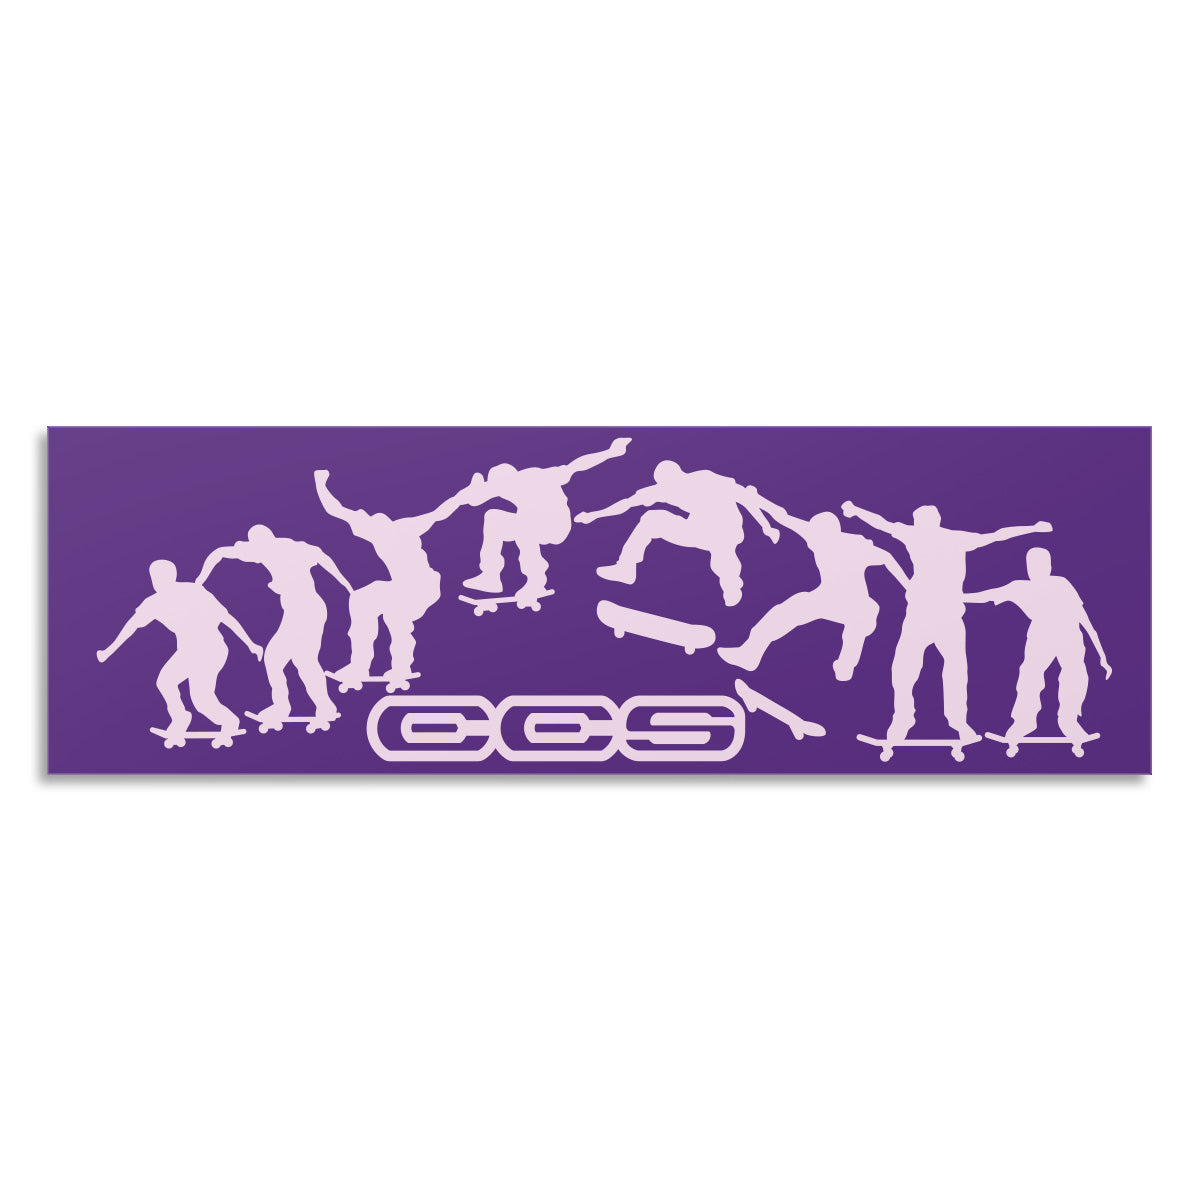 CCS Kickflip Sticker - Purple/Lt Pink image 1